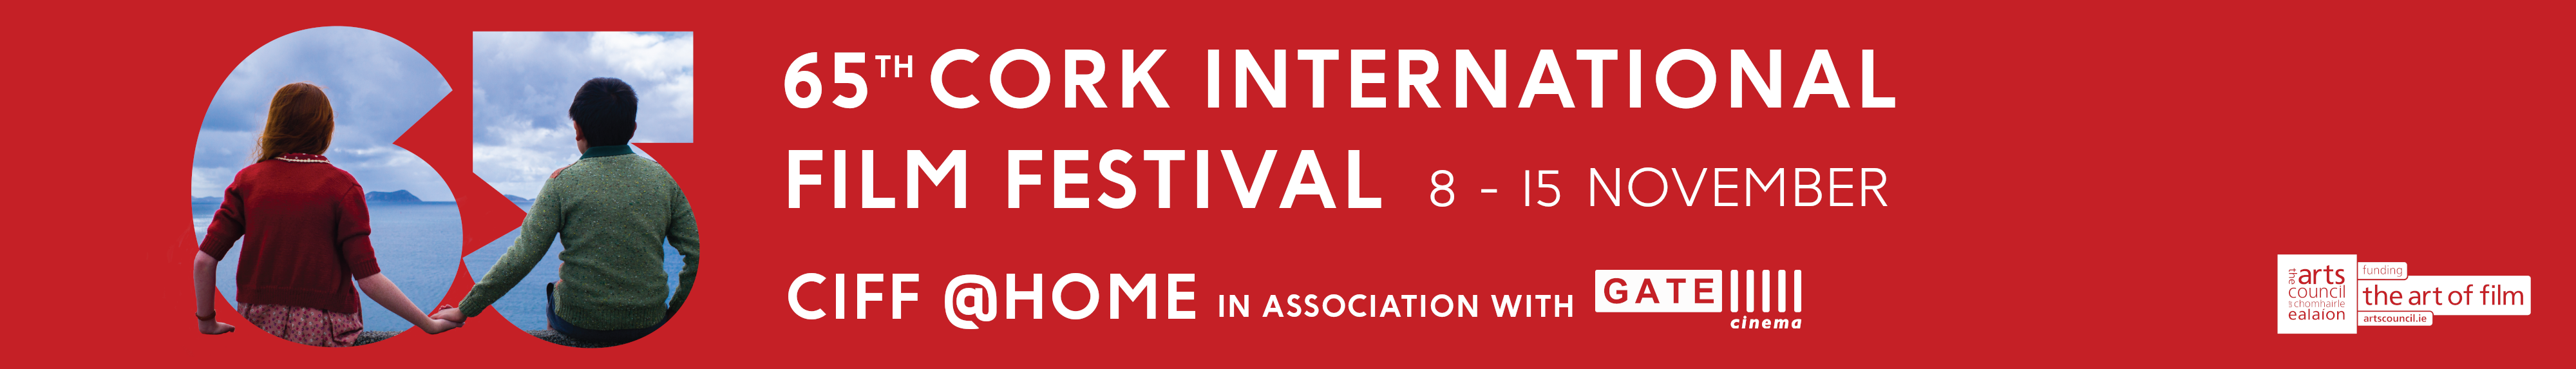 65th Cork International Film Festival